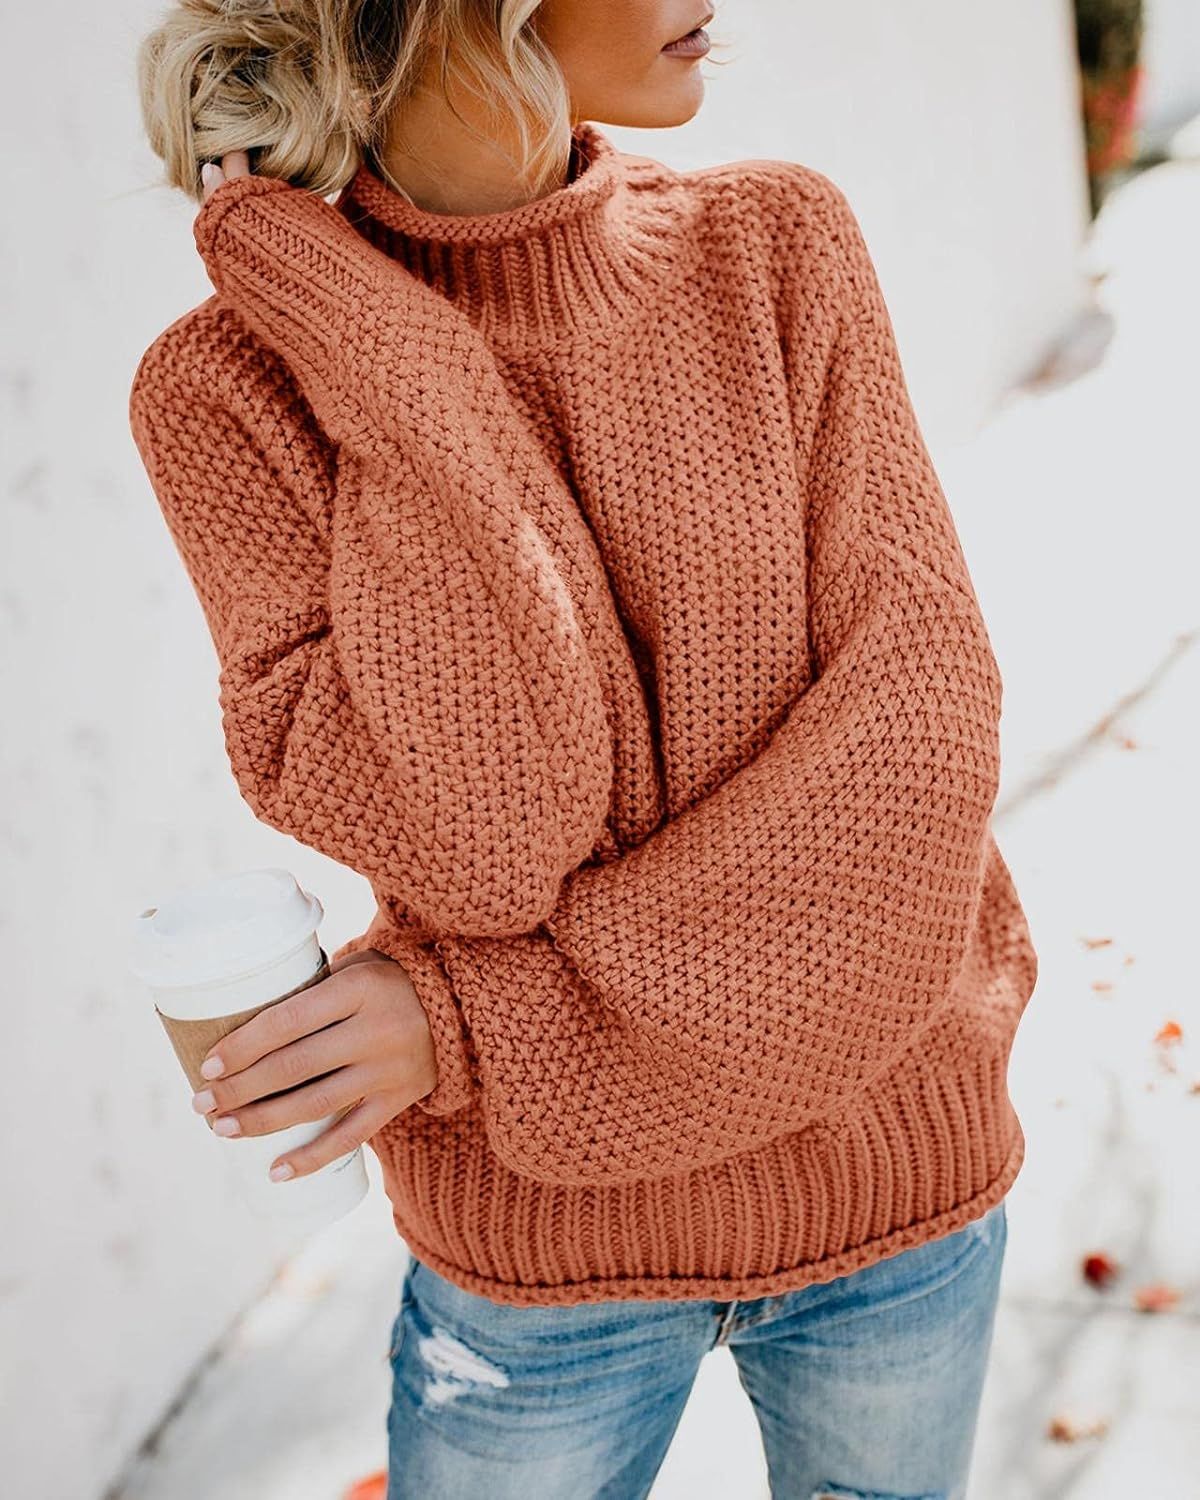 Saodimallsu Womens Turtleneck Oversized Sweaters Batwing Long Sleeve Pullover Loose Chunky Knit Jump | Amazon (US)